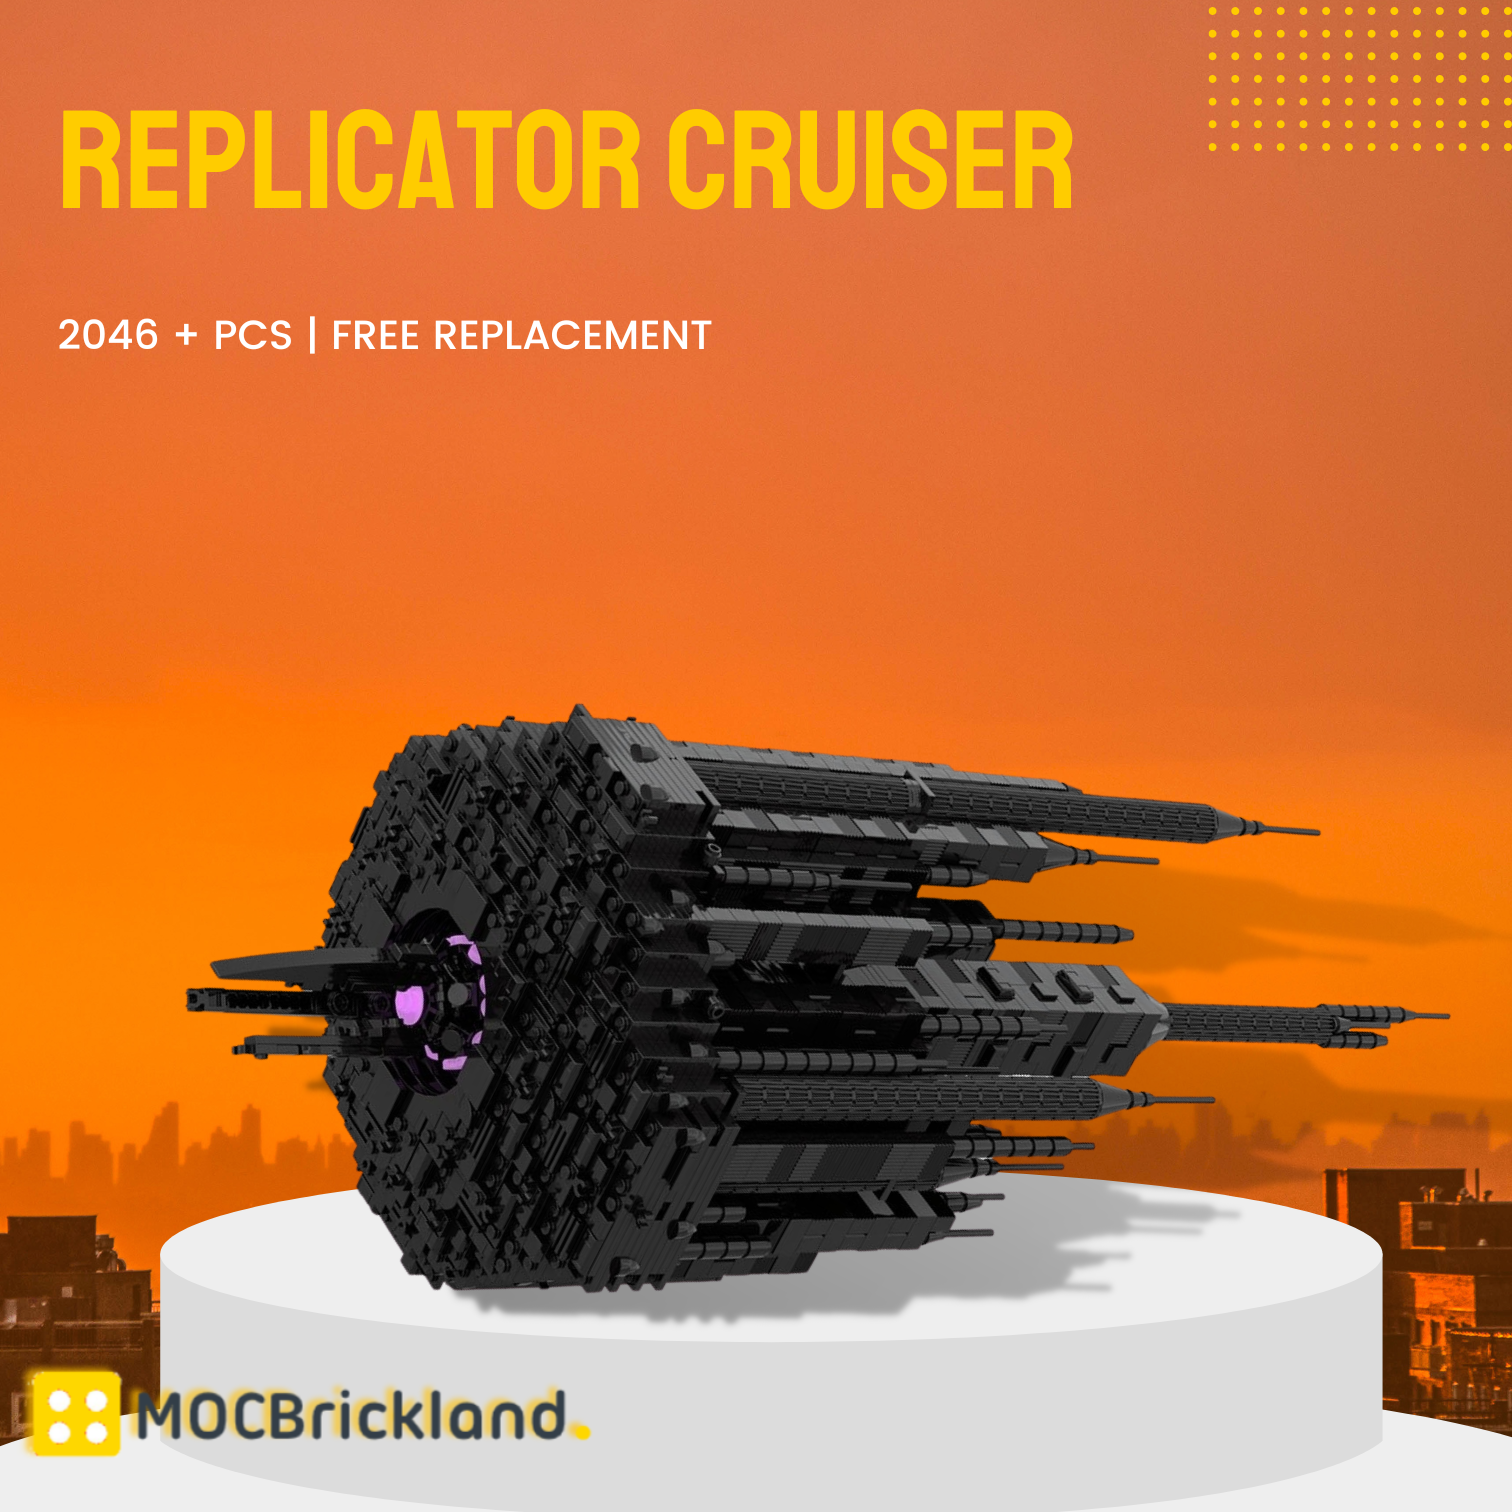 Replicator Cruiser Moc 125965